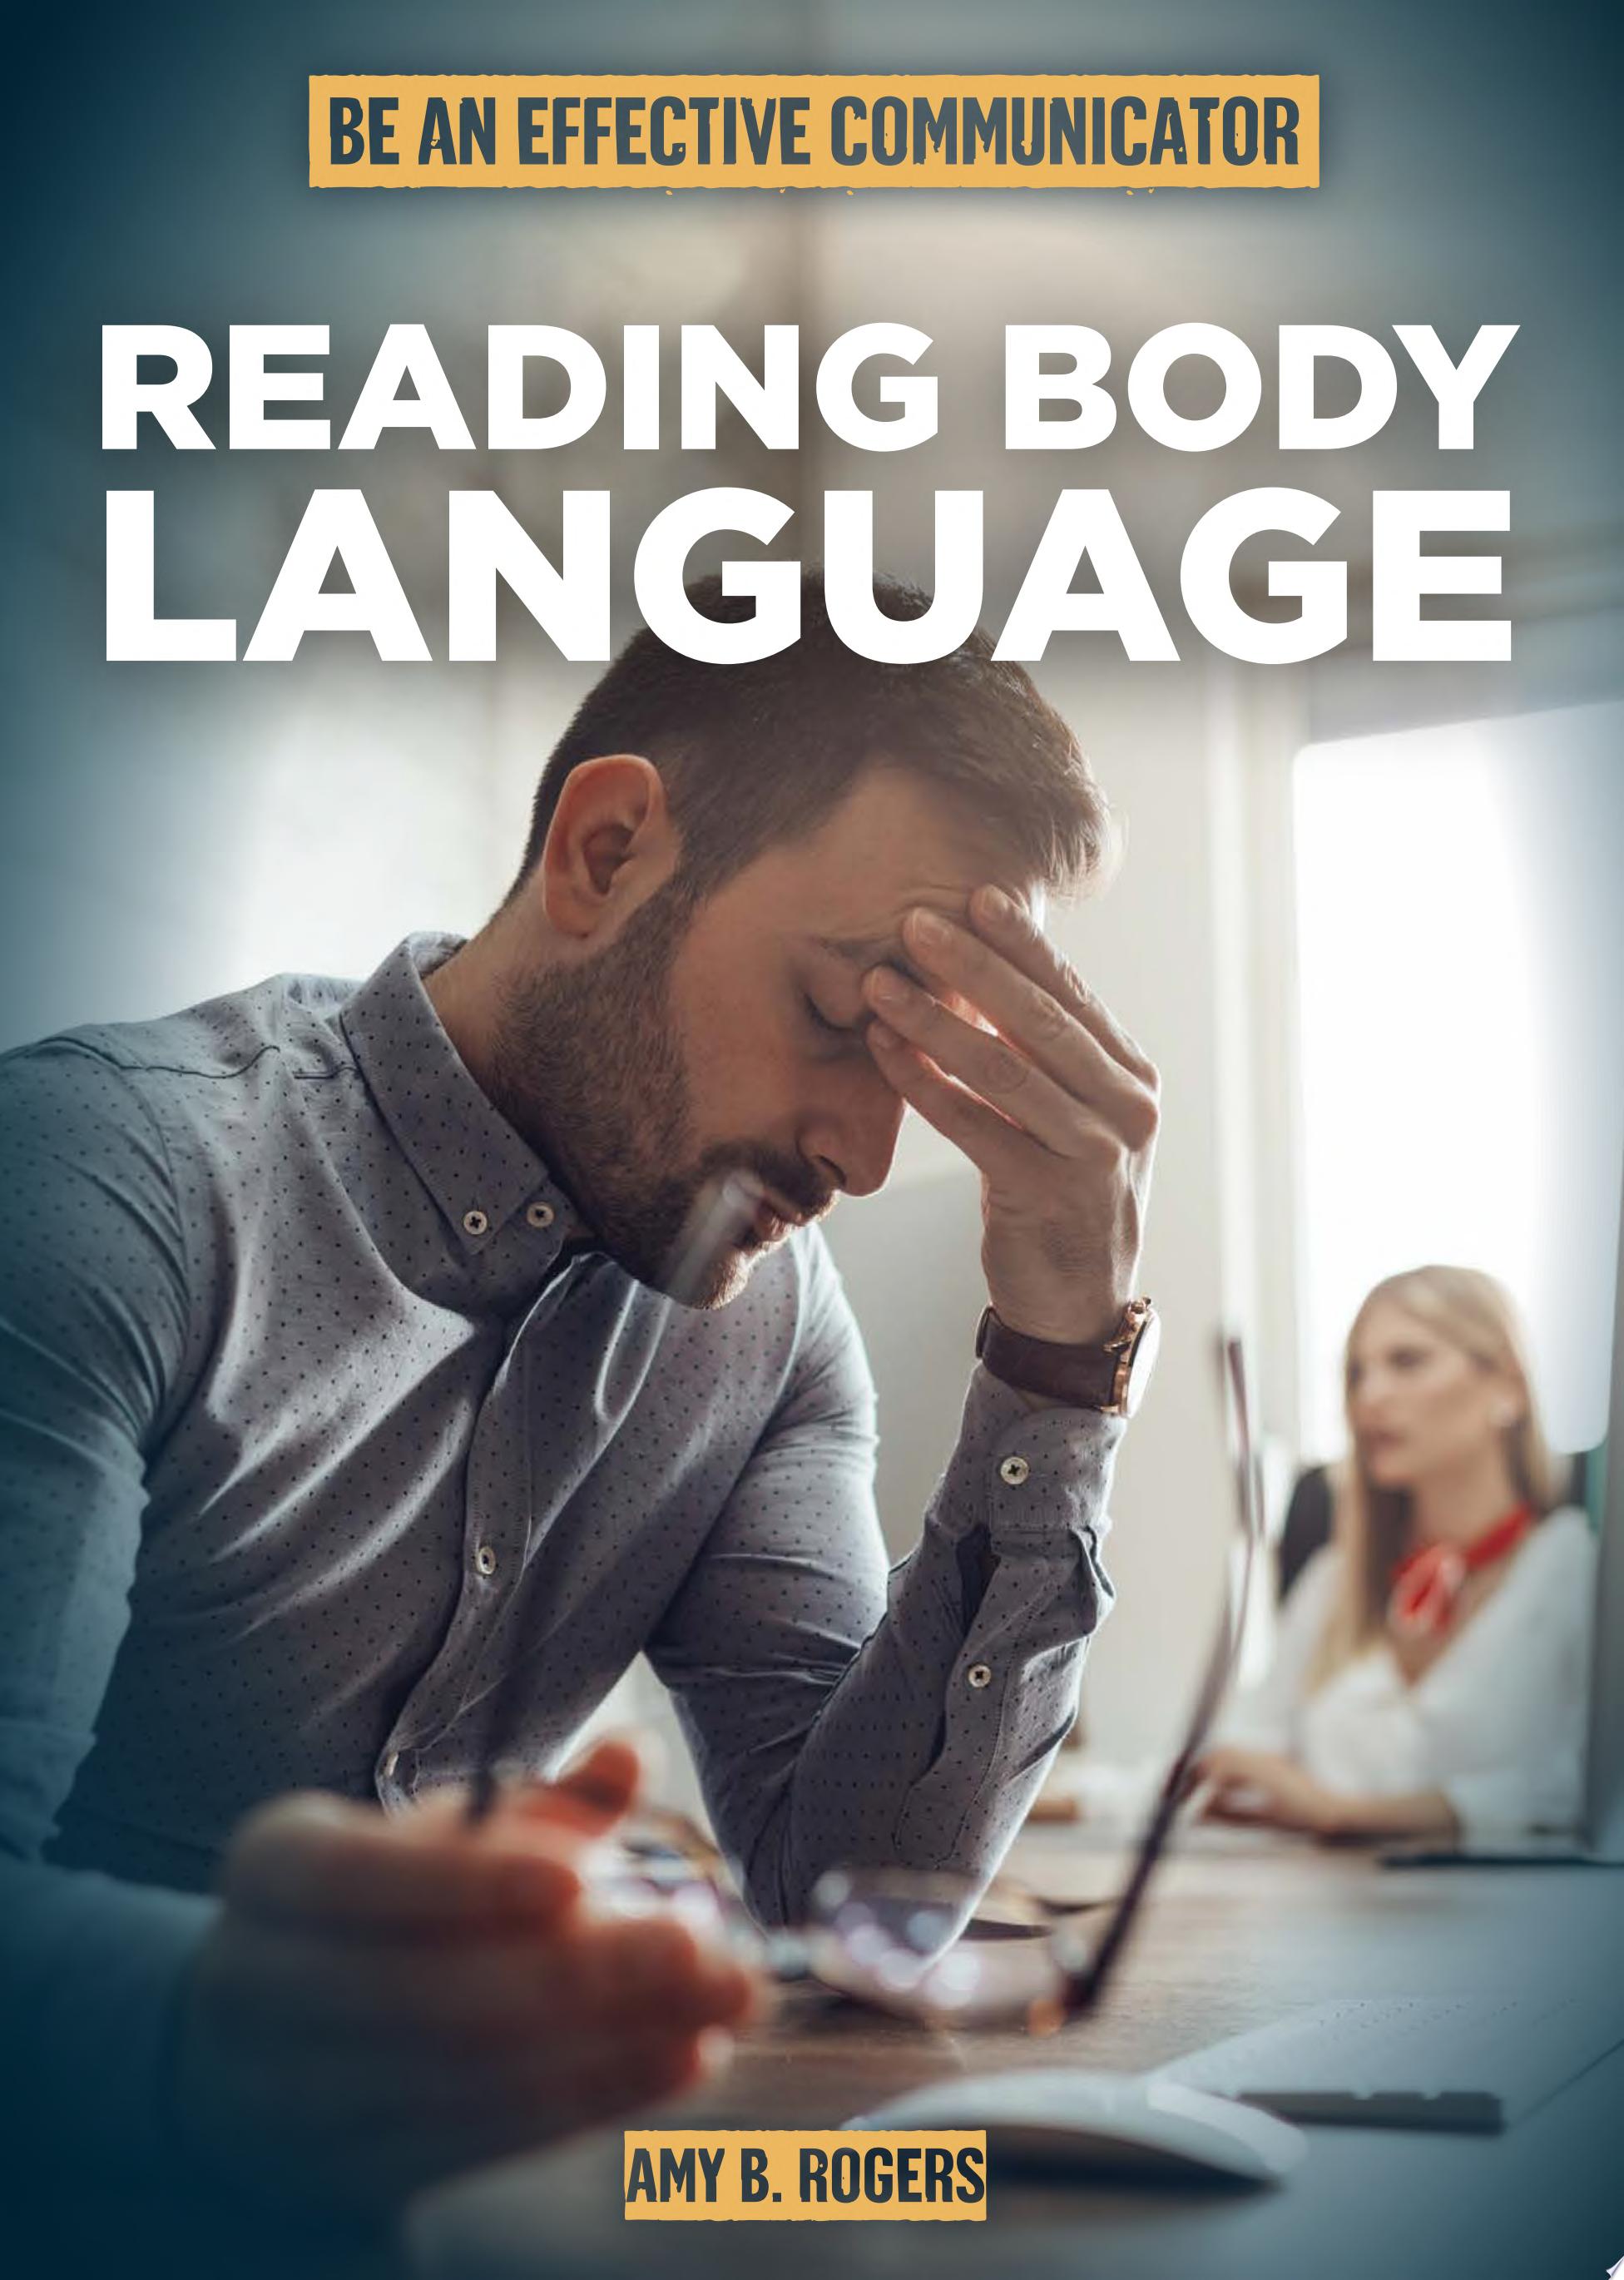 Image for "Reading Body Language"